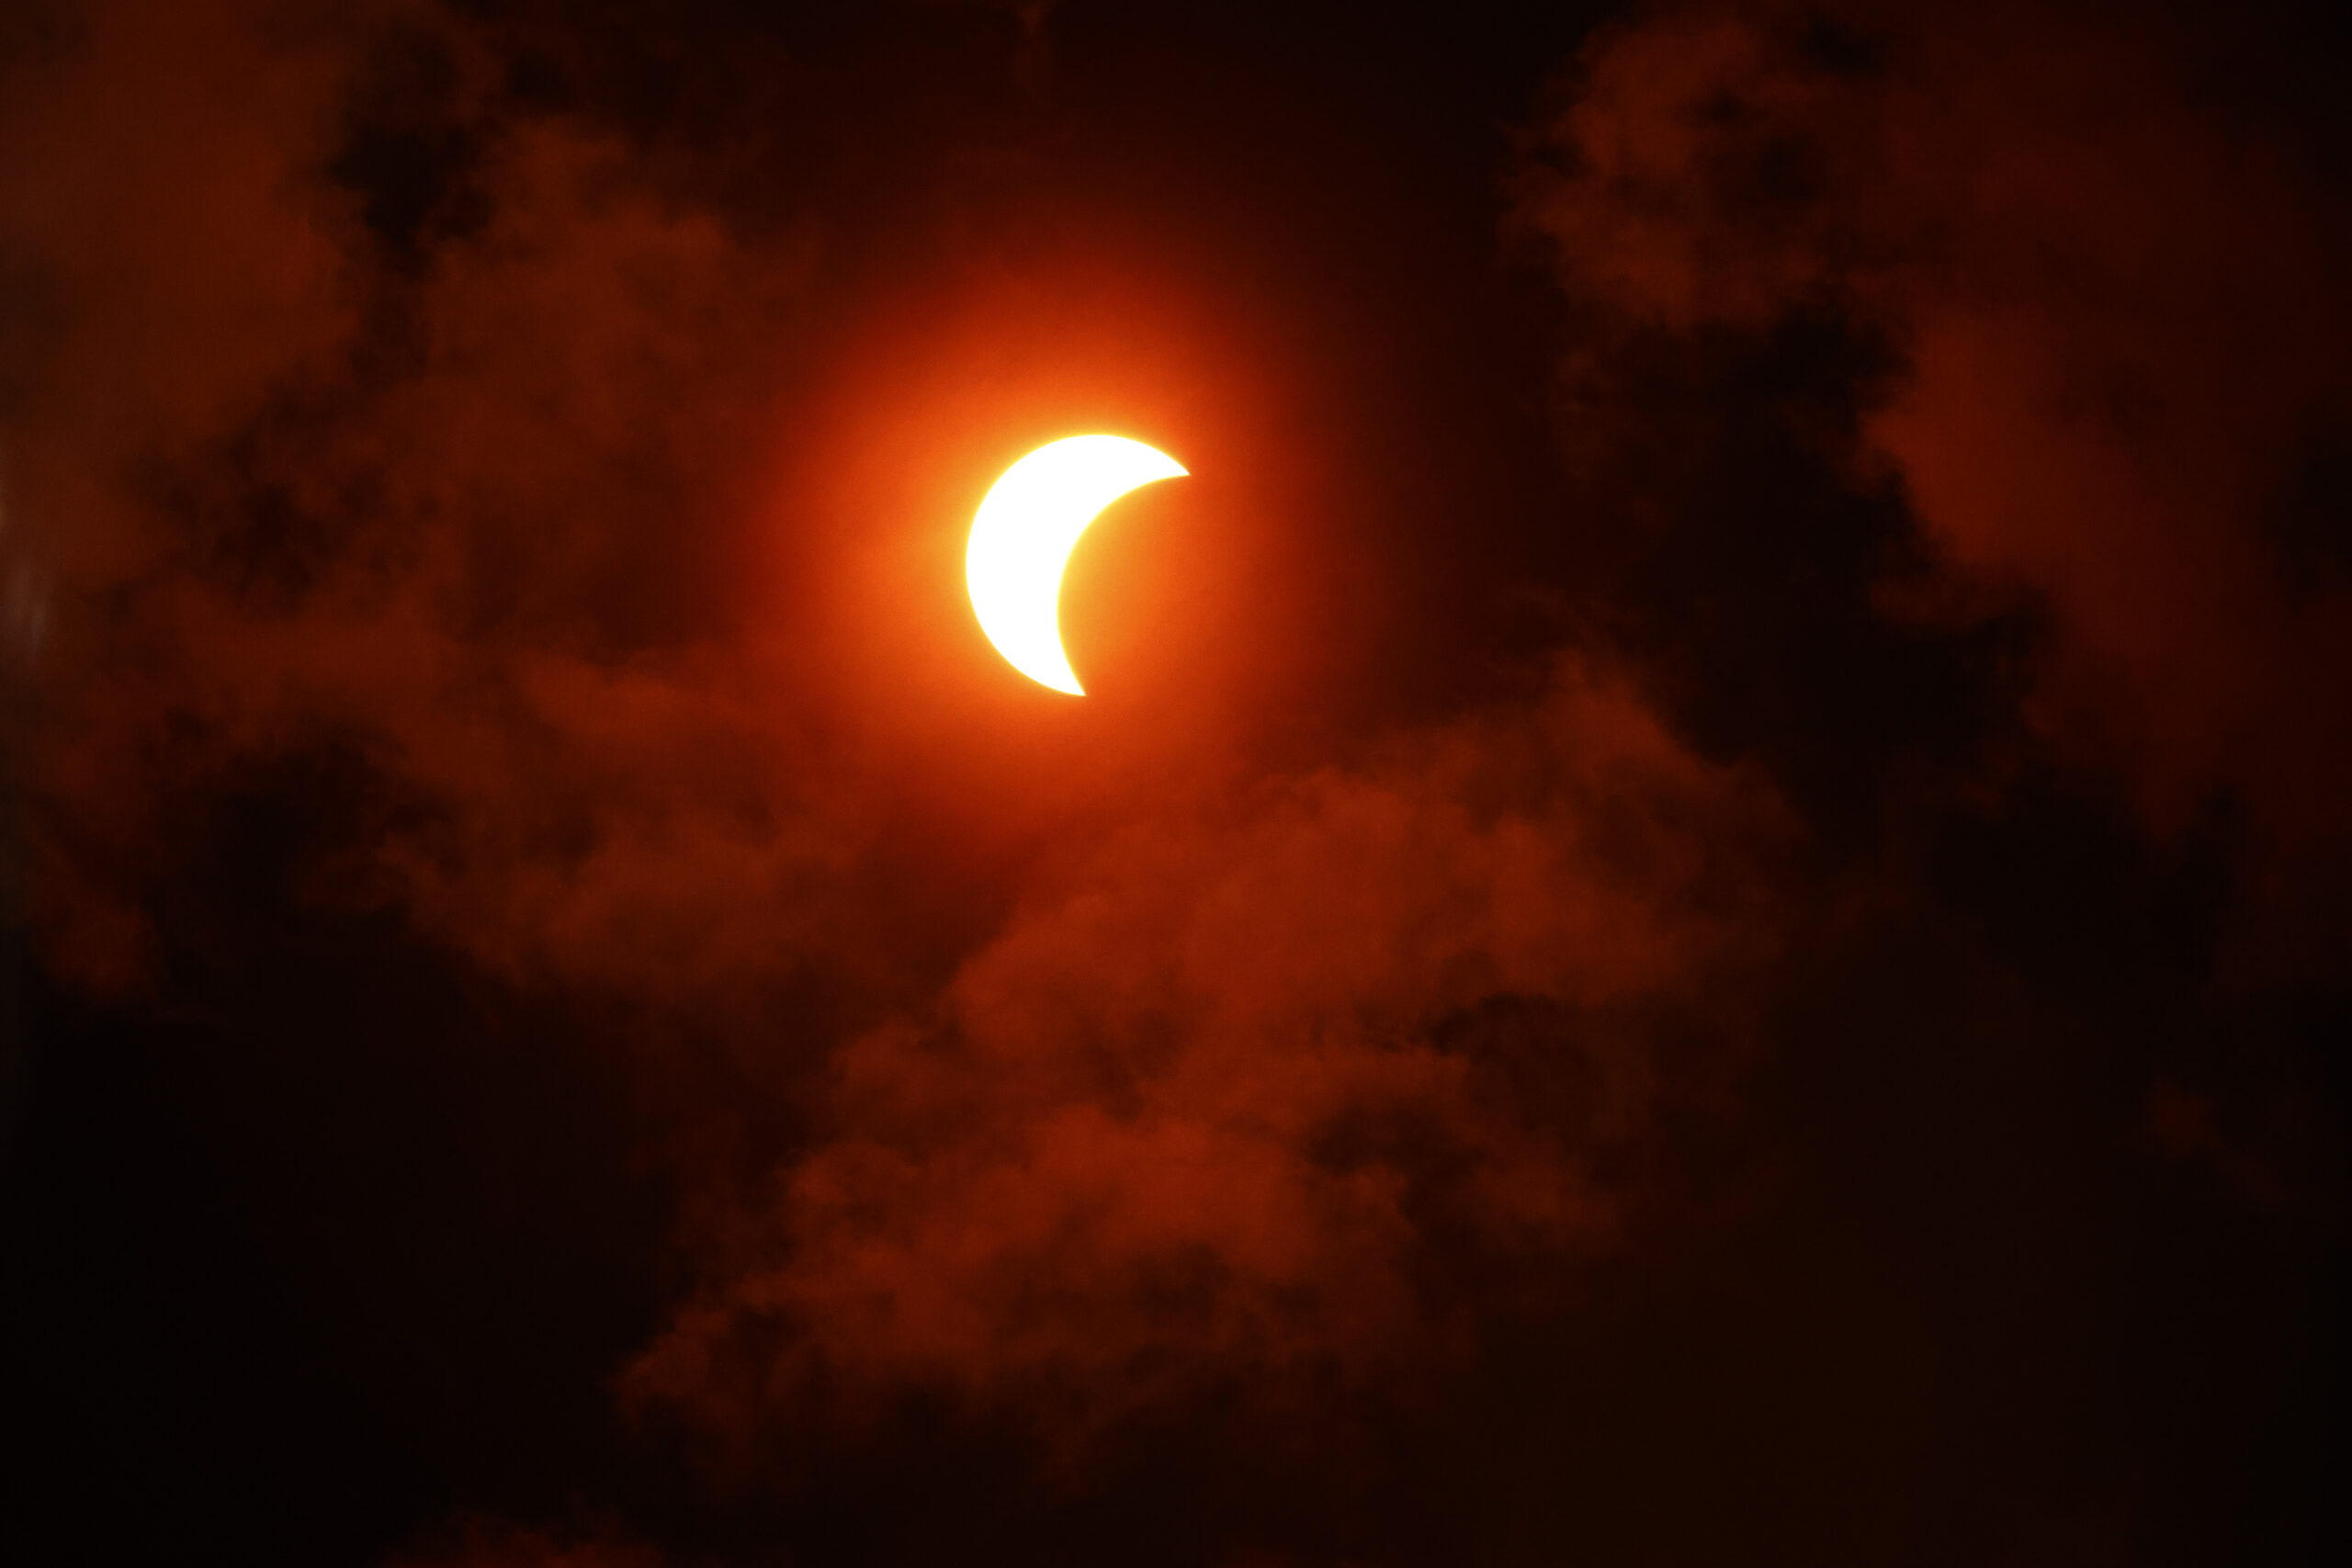 US witnesses solar eclipse